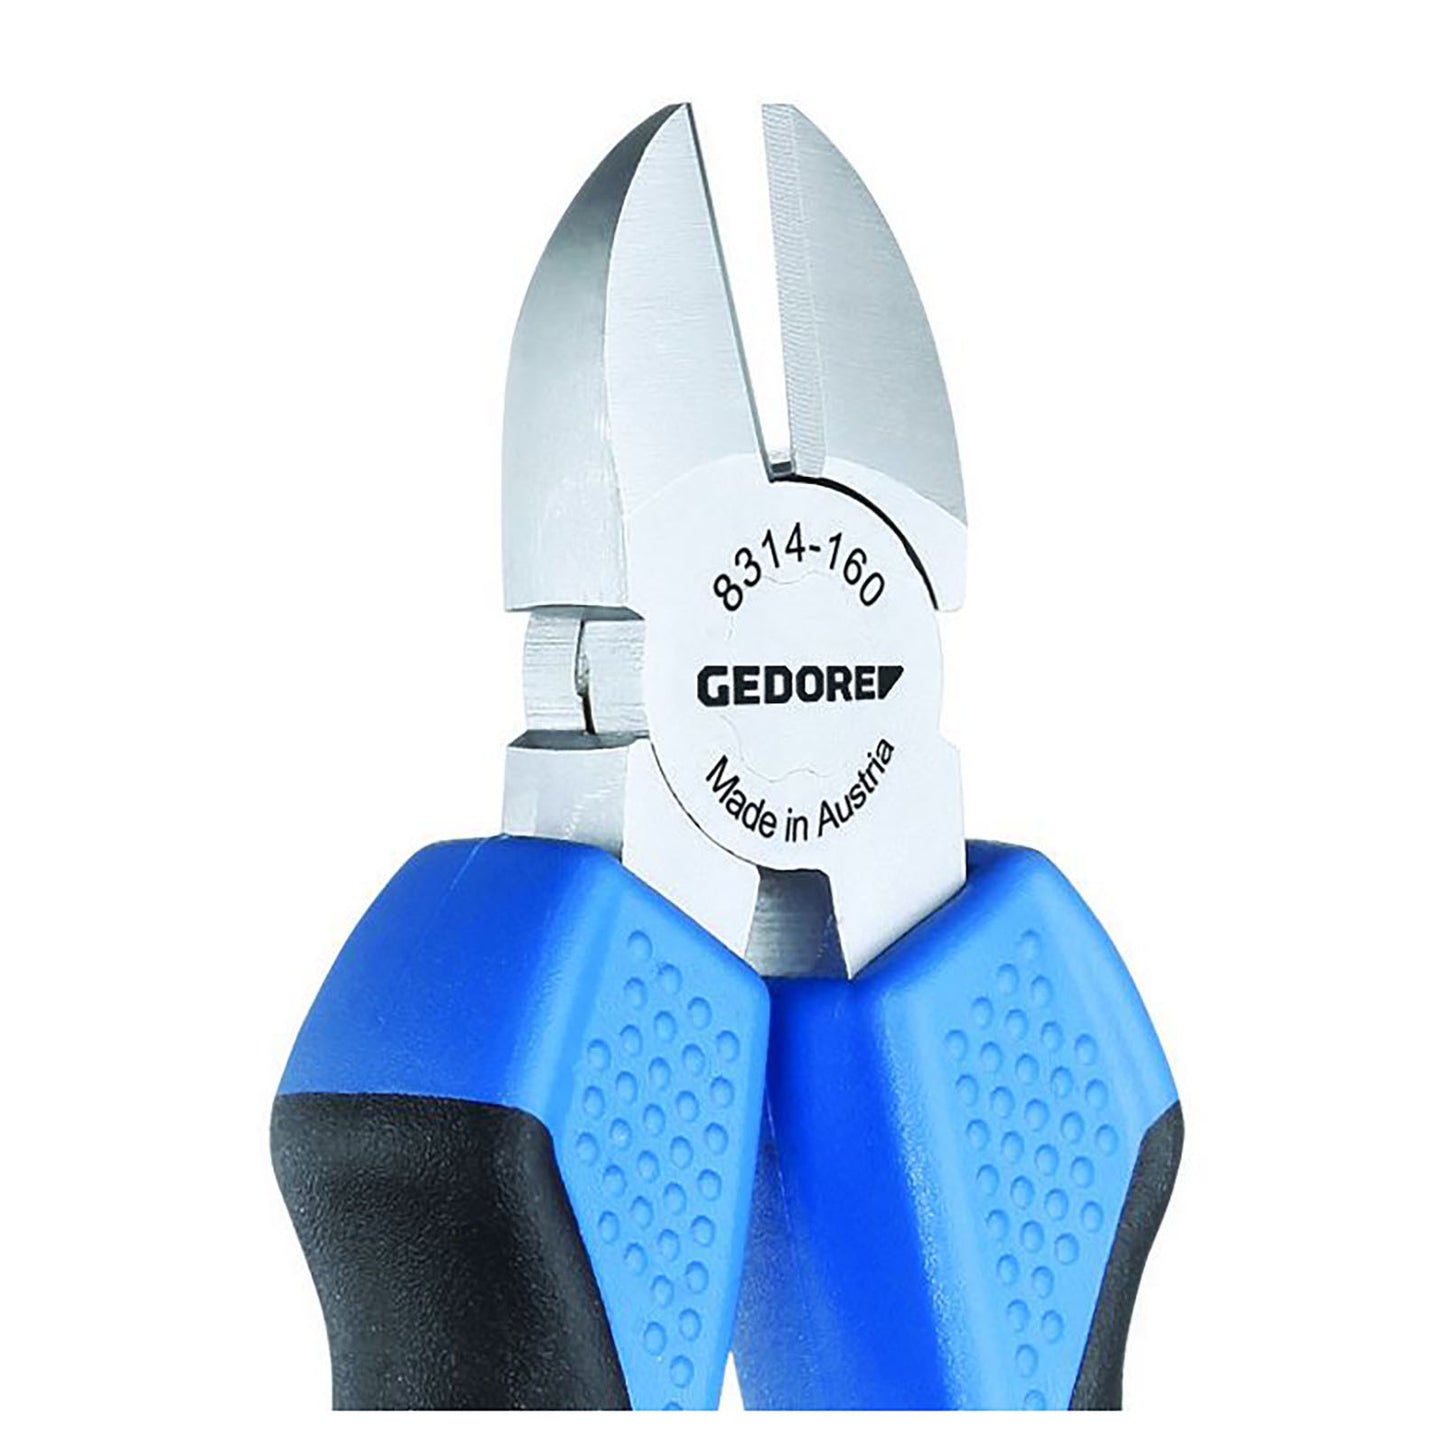 GEDORE 8314-125 TL - Diagonal cutting pliers 125 mm (6740870)